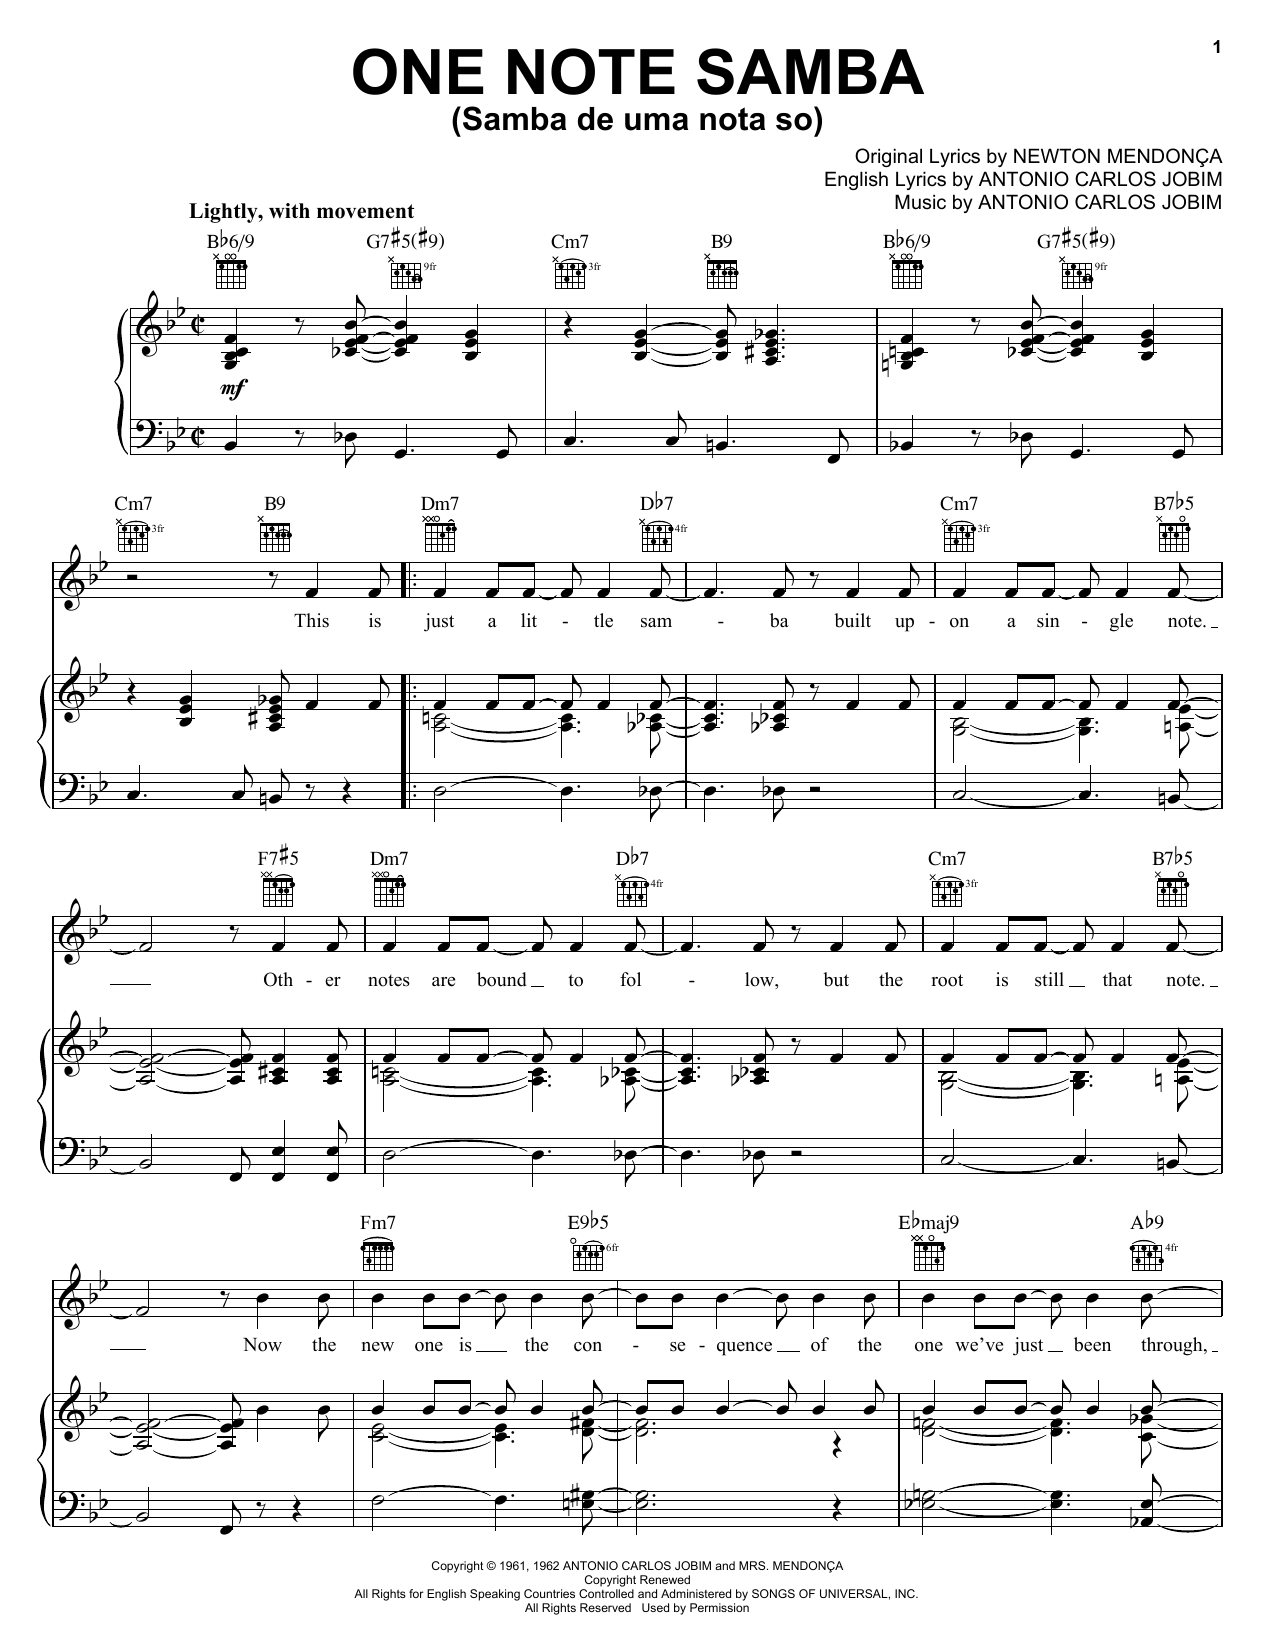 Antonio Carlos Jobim One Note Samba (Samba De Uma Nota So) Sheet Music Notes & Chords for Melody Line, Lyrics & Chords - Download or Print PDF